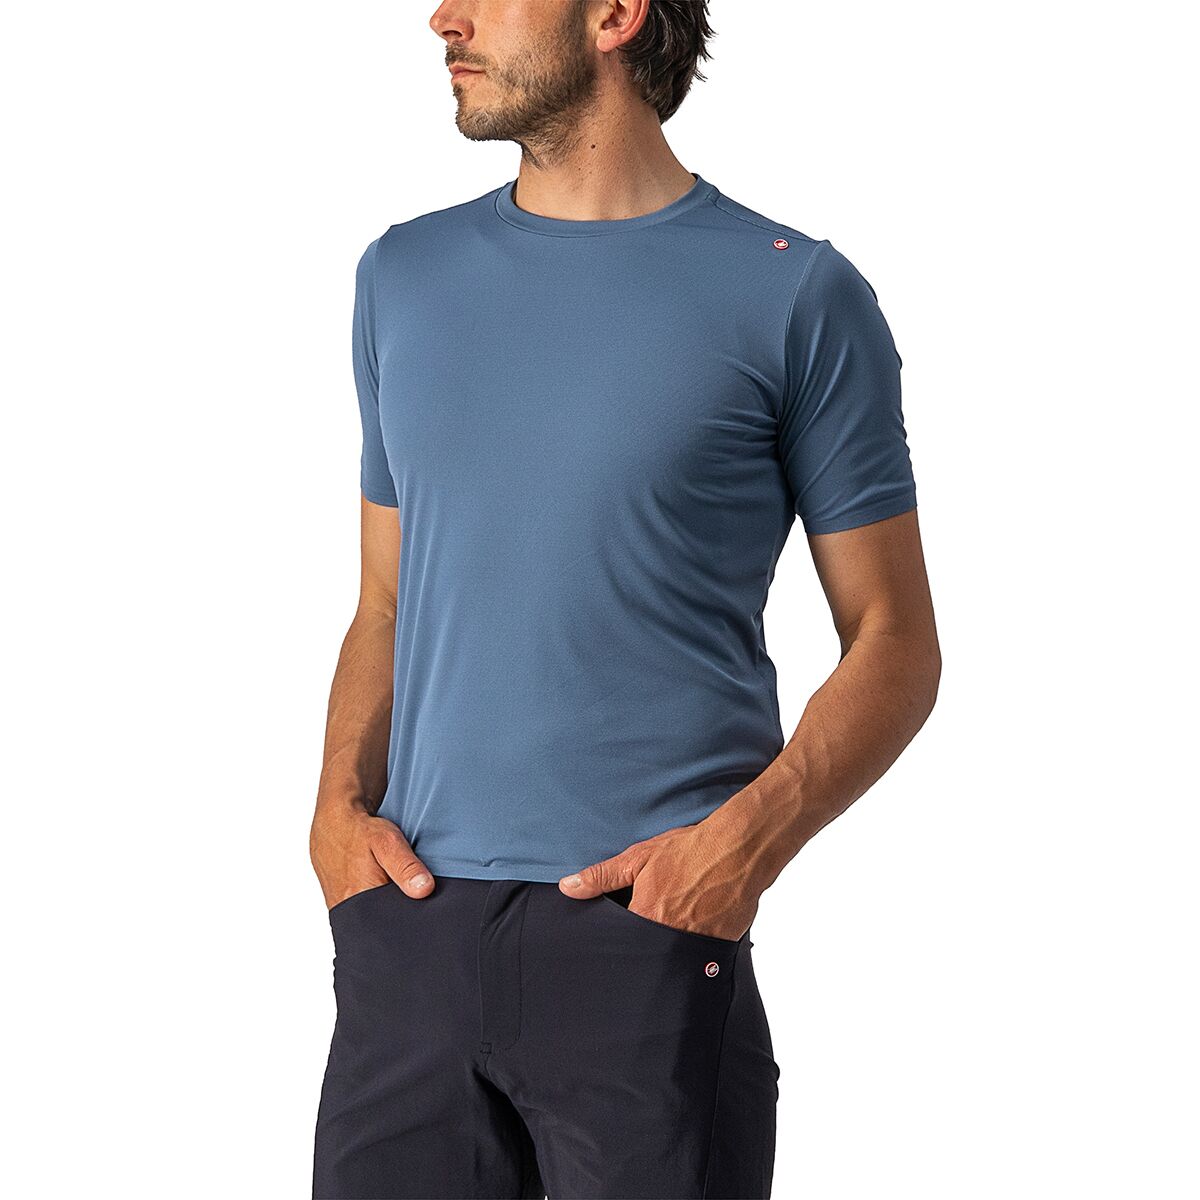 Castelli Tech 2 T-Shirt – Men’s Light Steel Blue, L